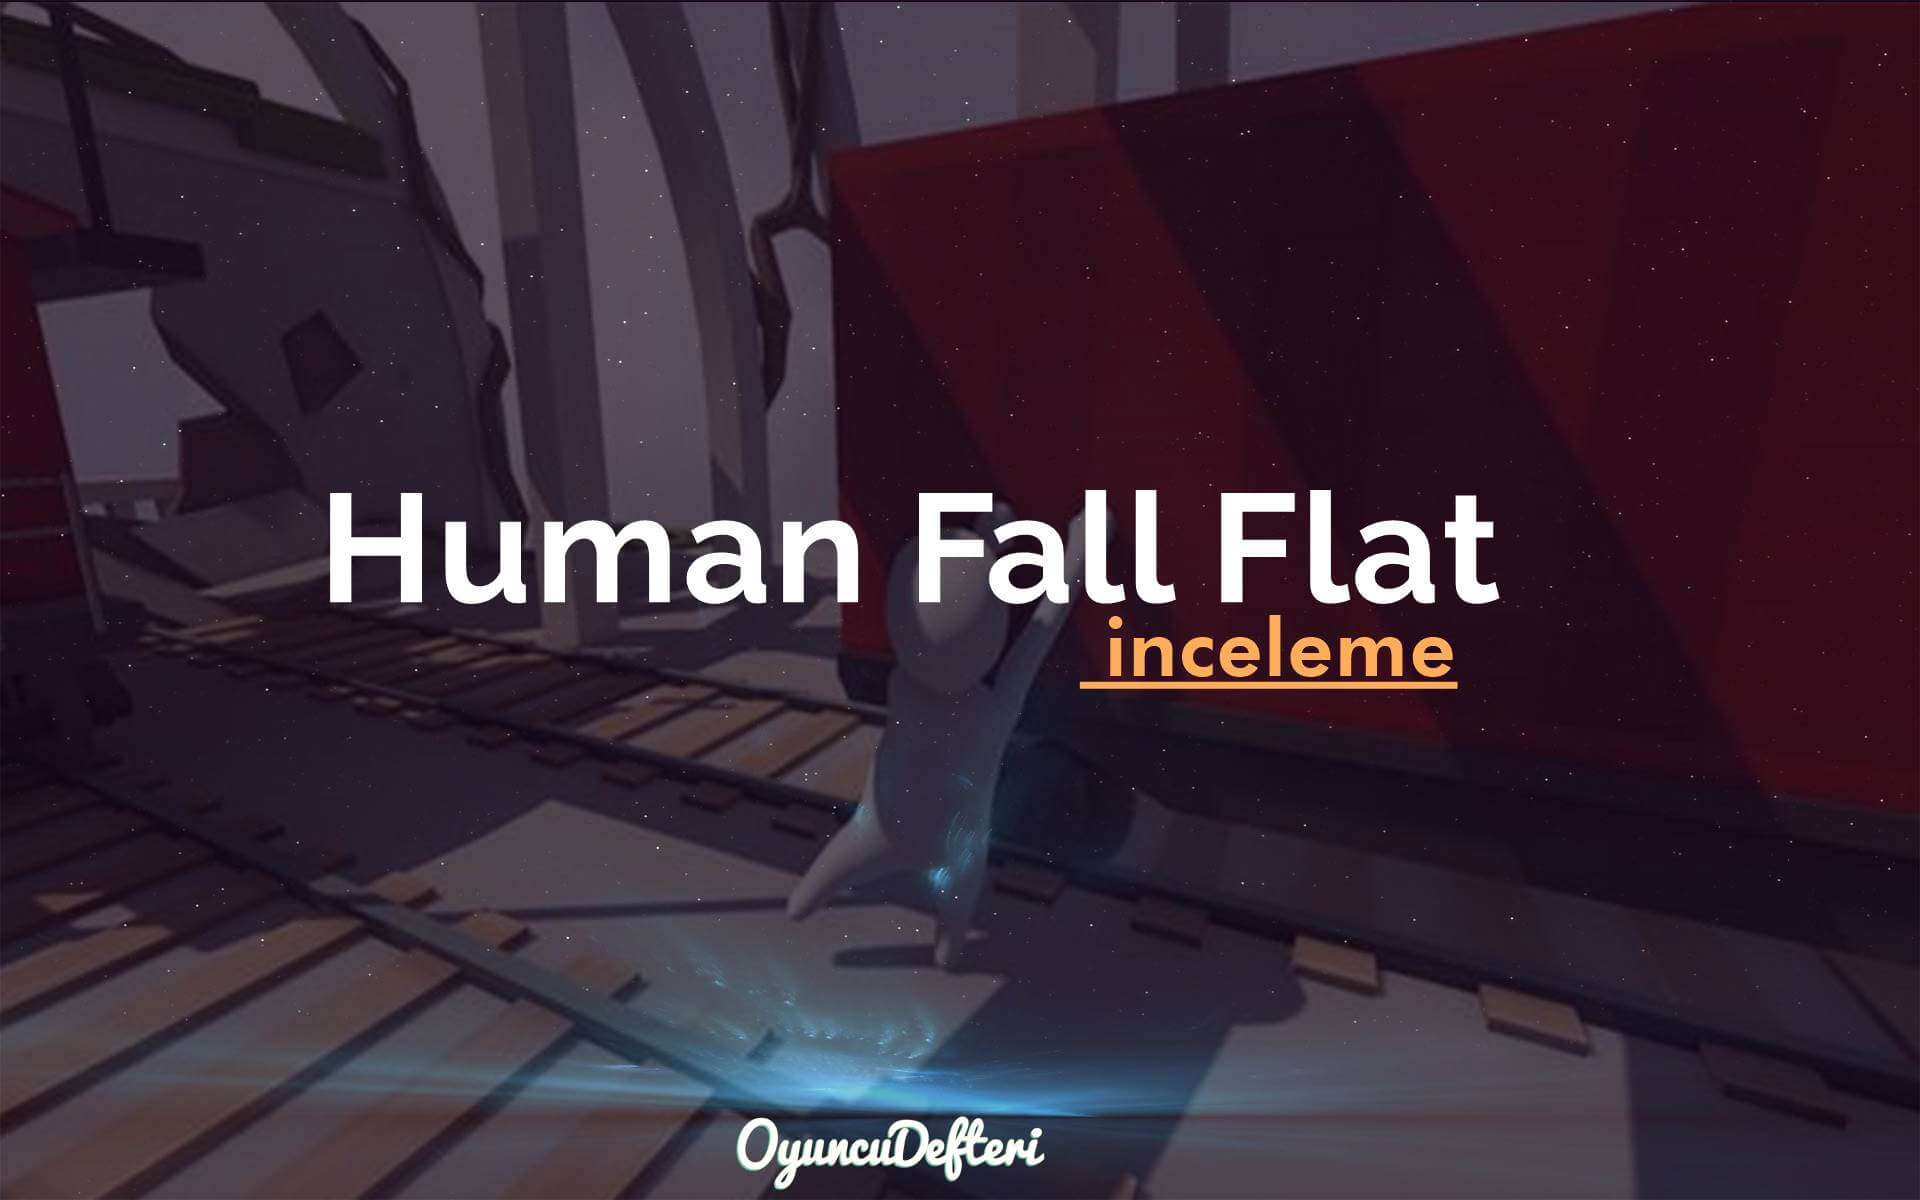 Human Fall Flat inceleme